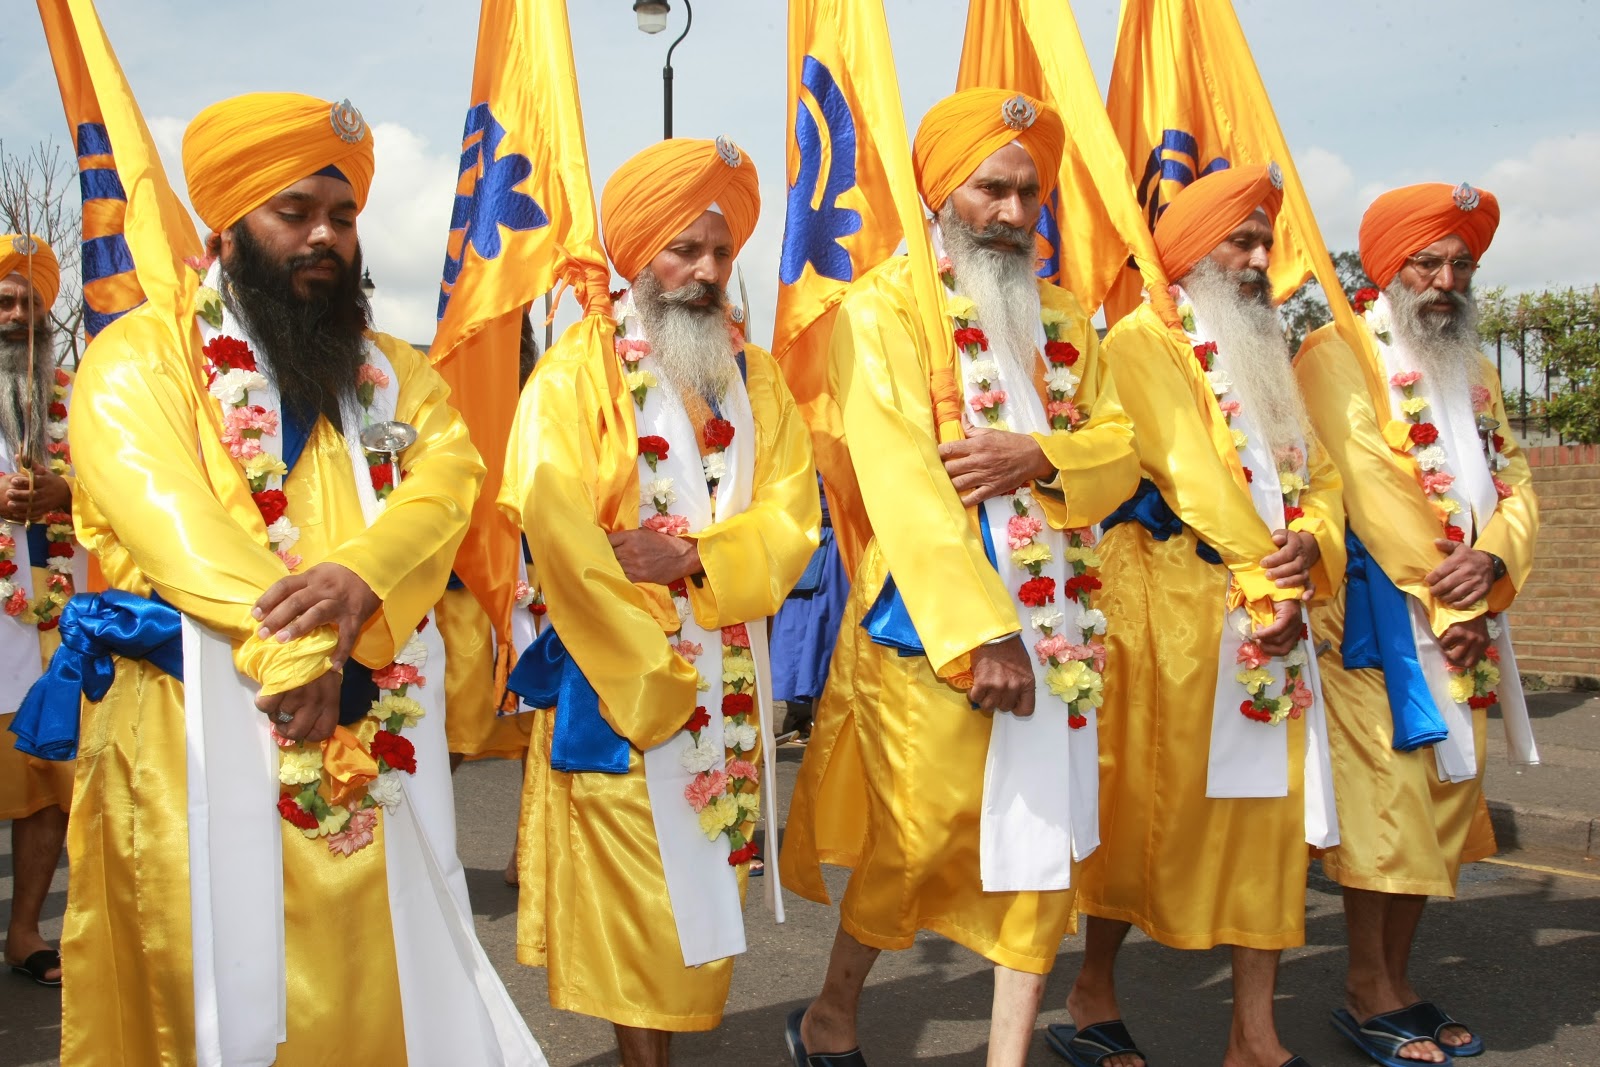 Sikhism Sikh Costume, Rituals, and Celebrations/Ceremonies